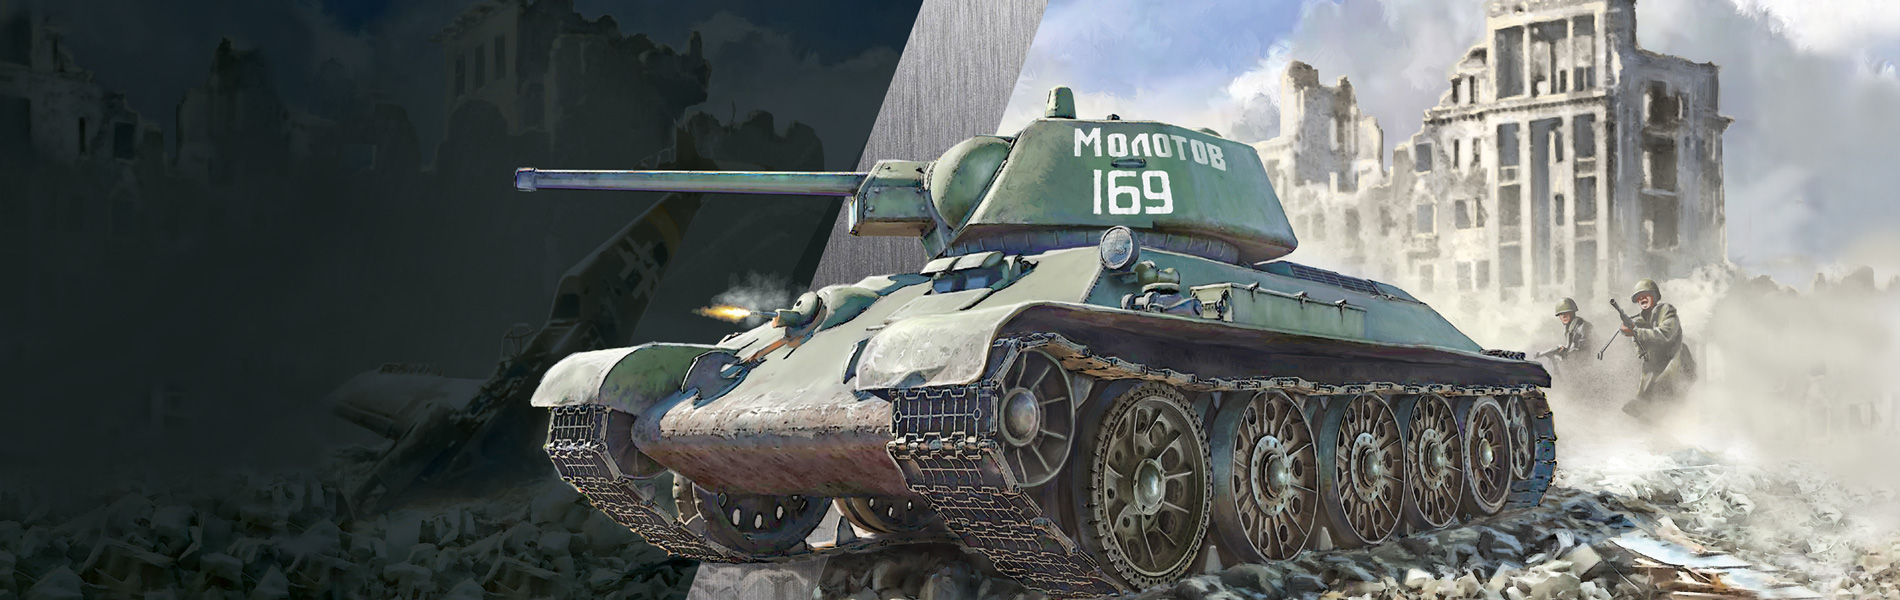 T-34/76
Model 1943